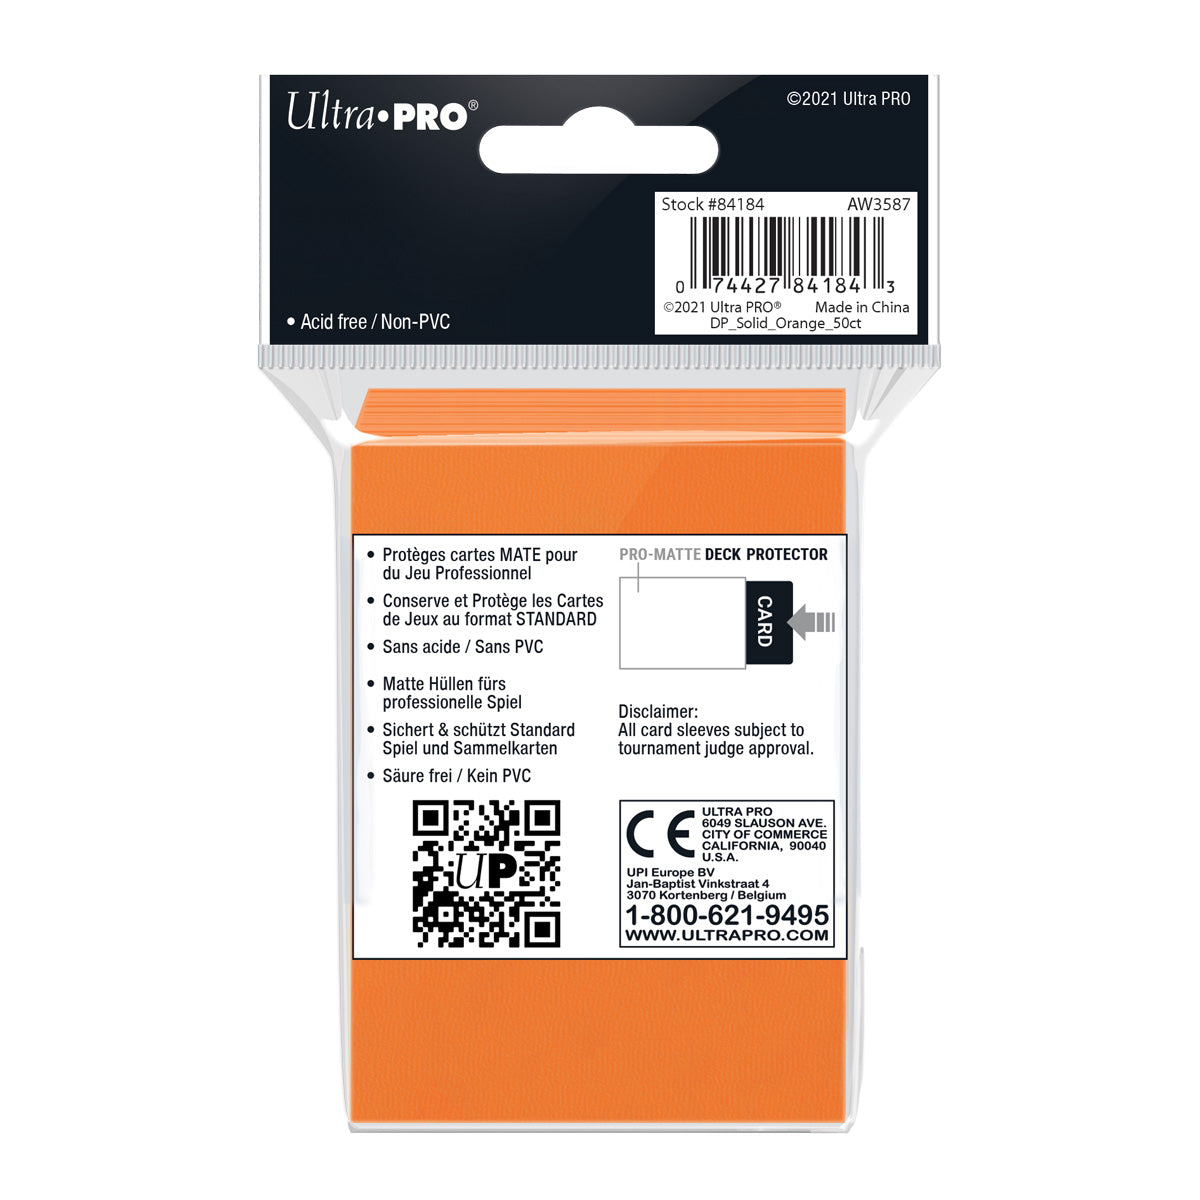 Ultra PRO Card Sleeve Pro-Matte Standard 50ct - Orange